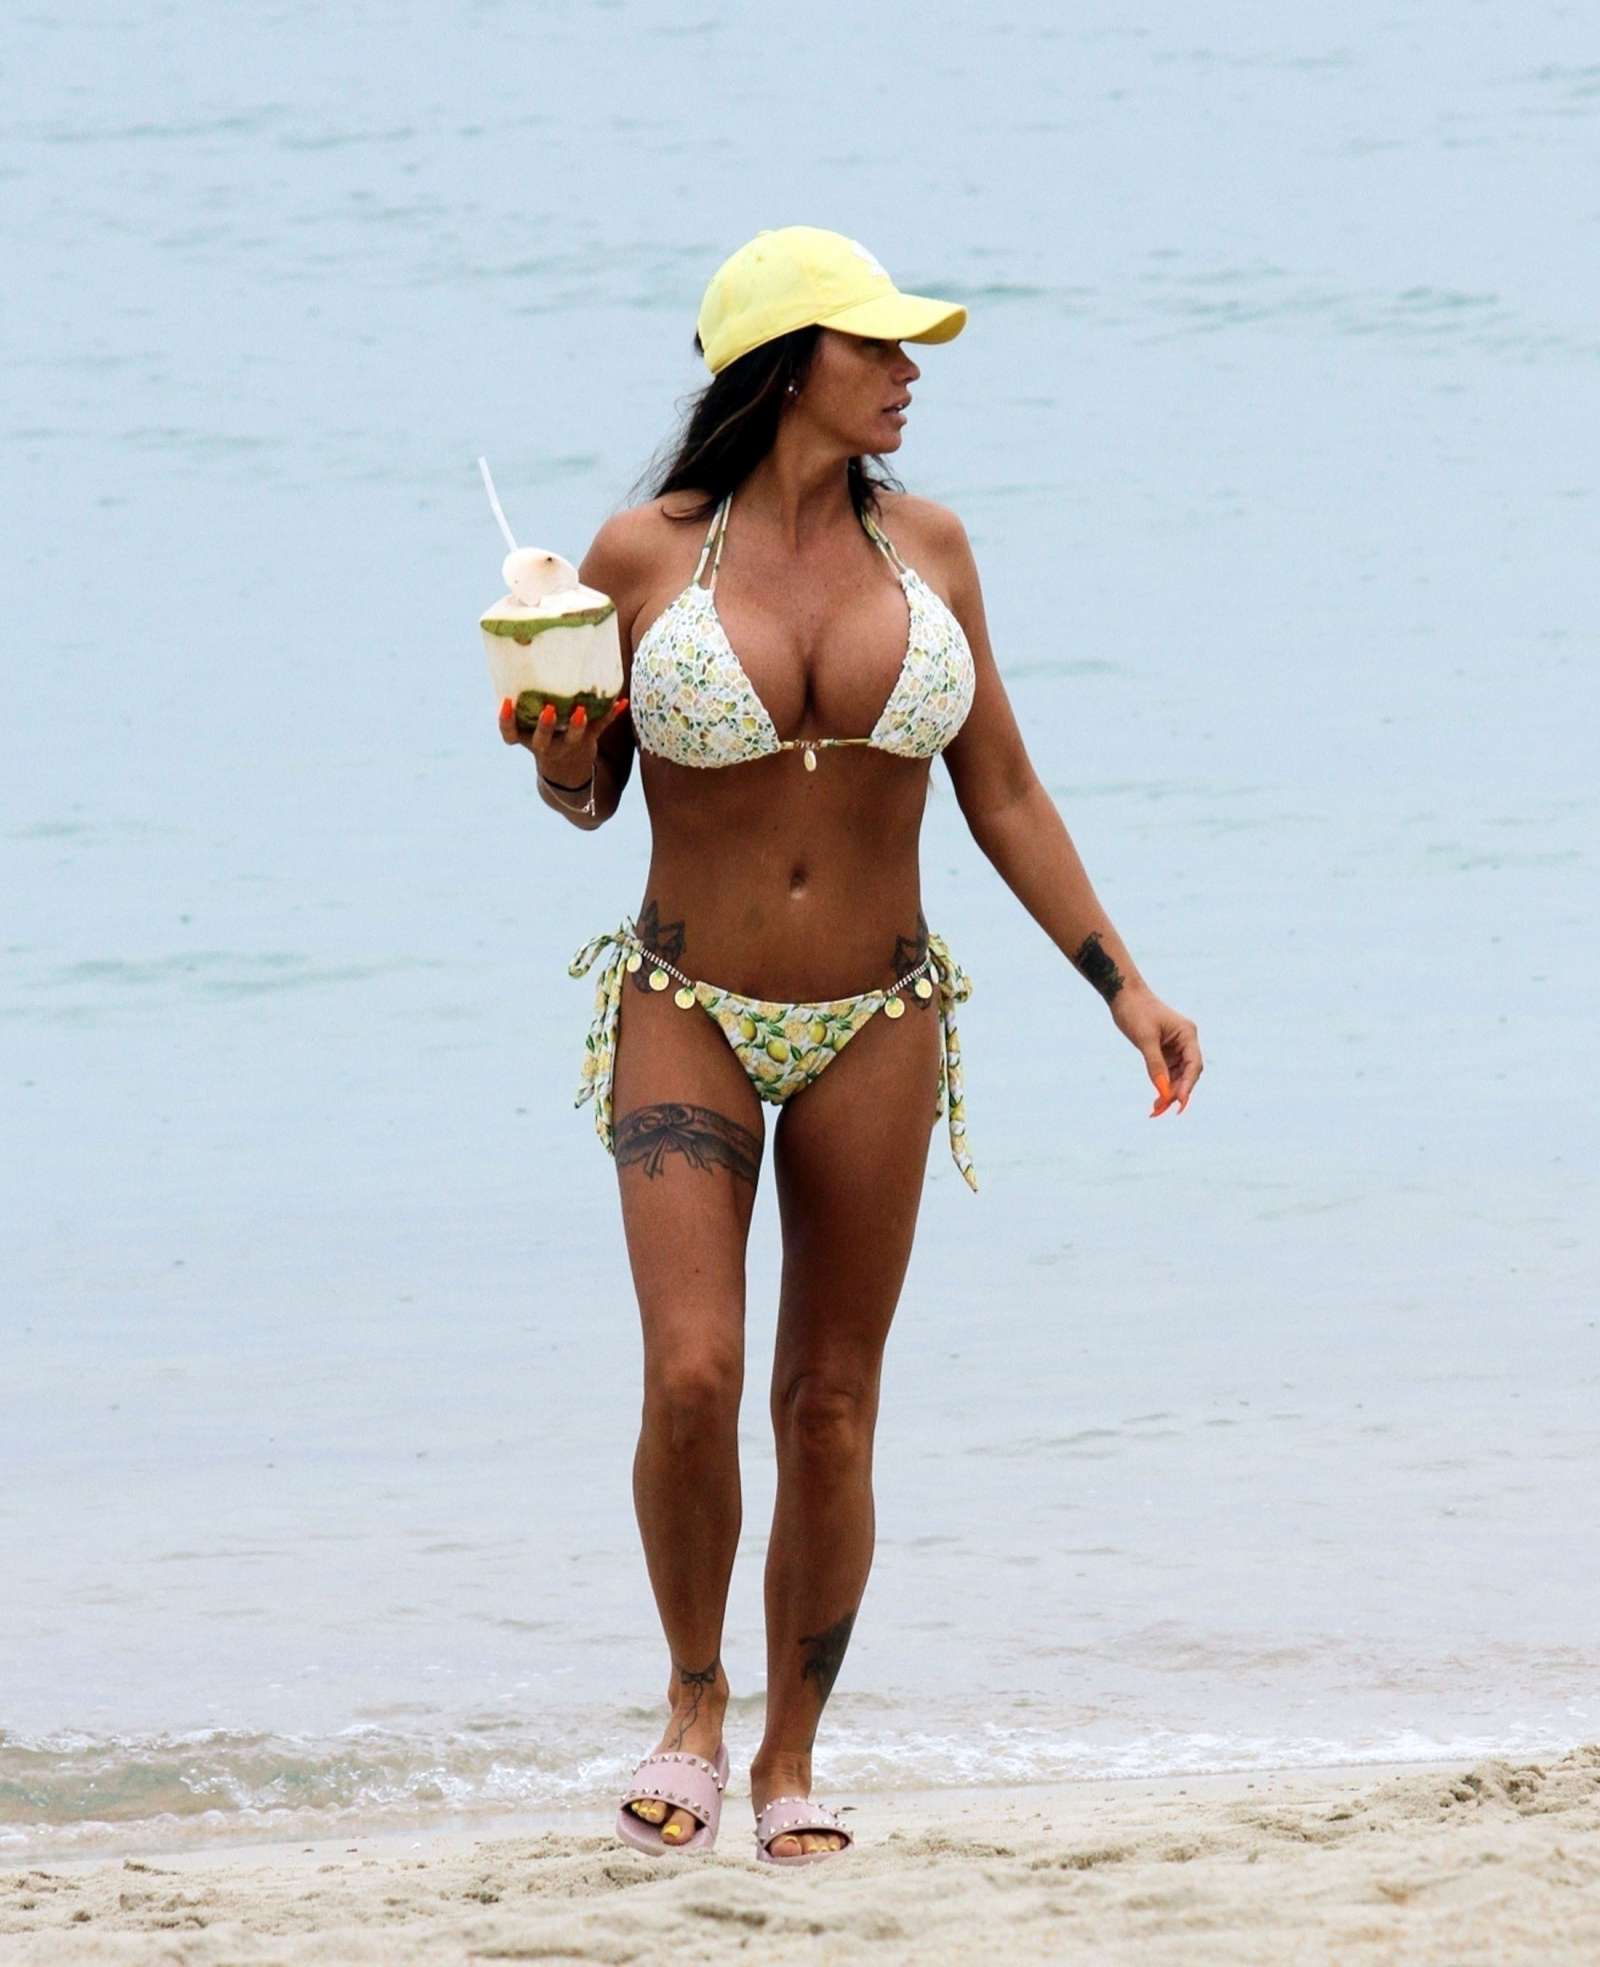 Katie Price in Bikini on the beach in Thailand